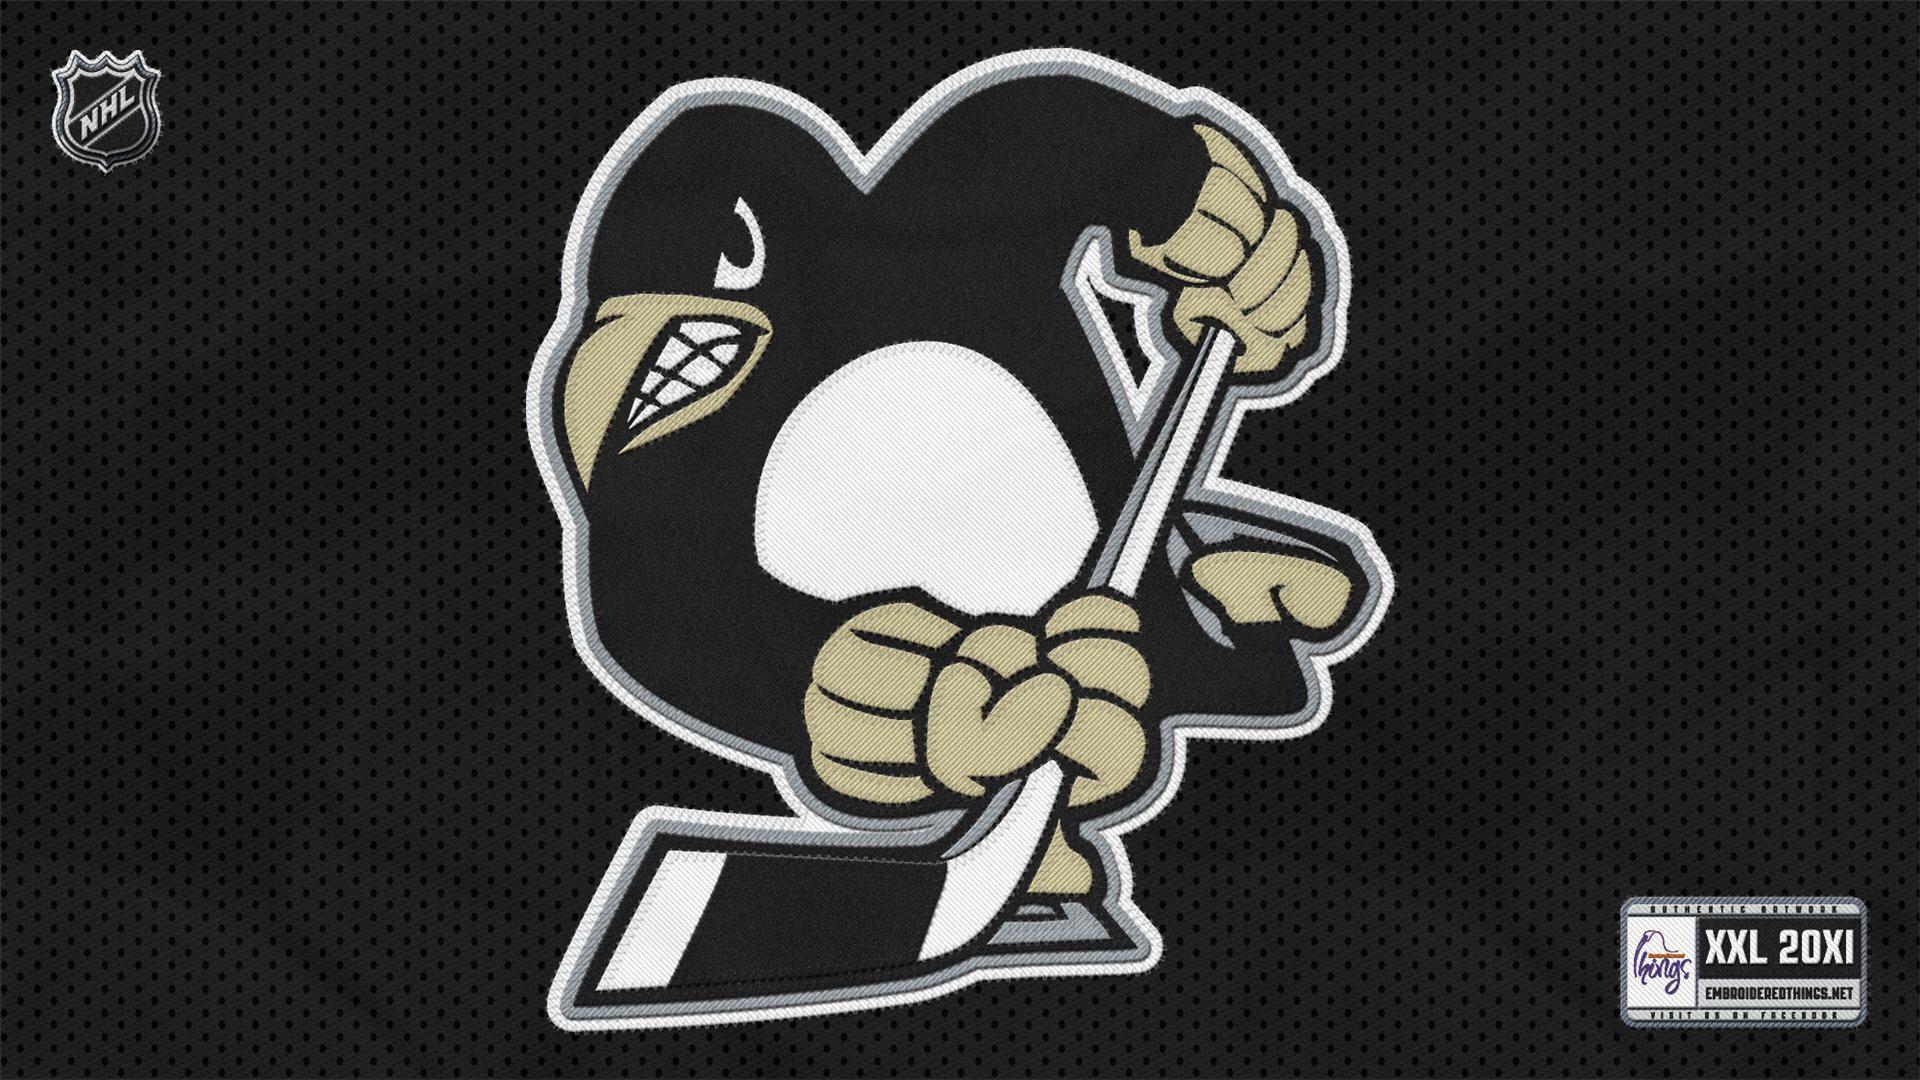 Pittsburgh Penguins desktop wallpaper. Pittsburgh Penguins